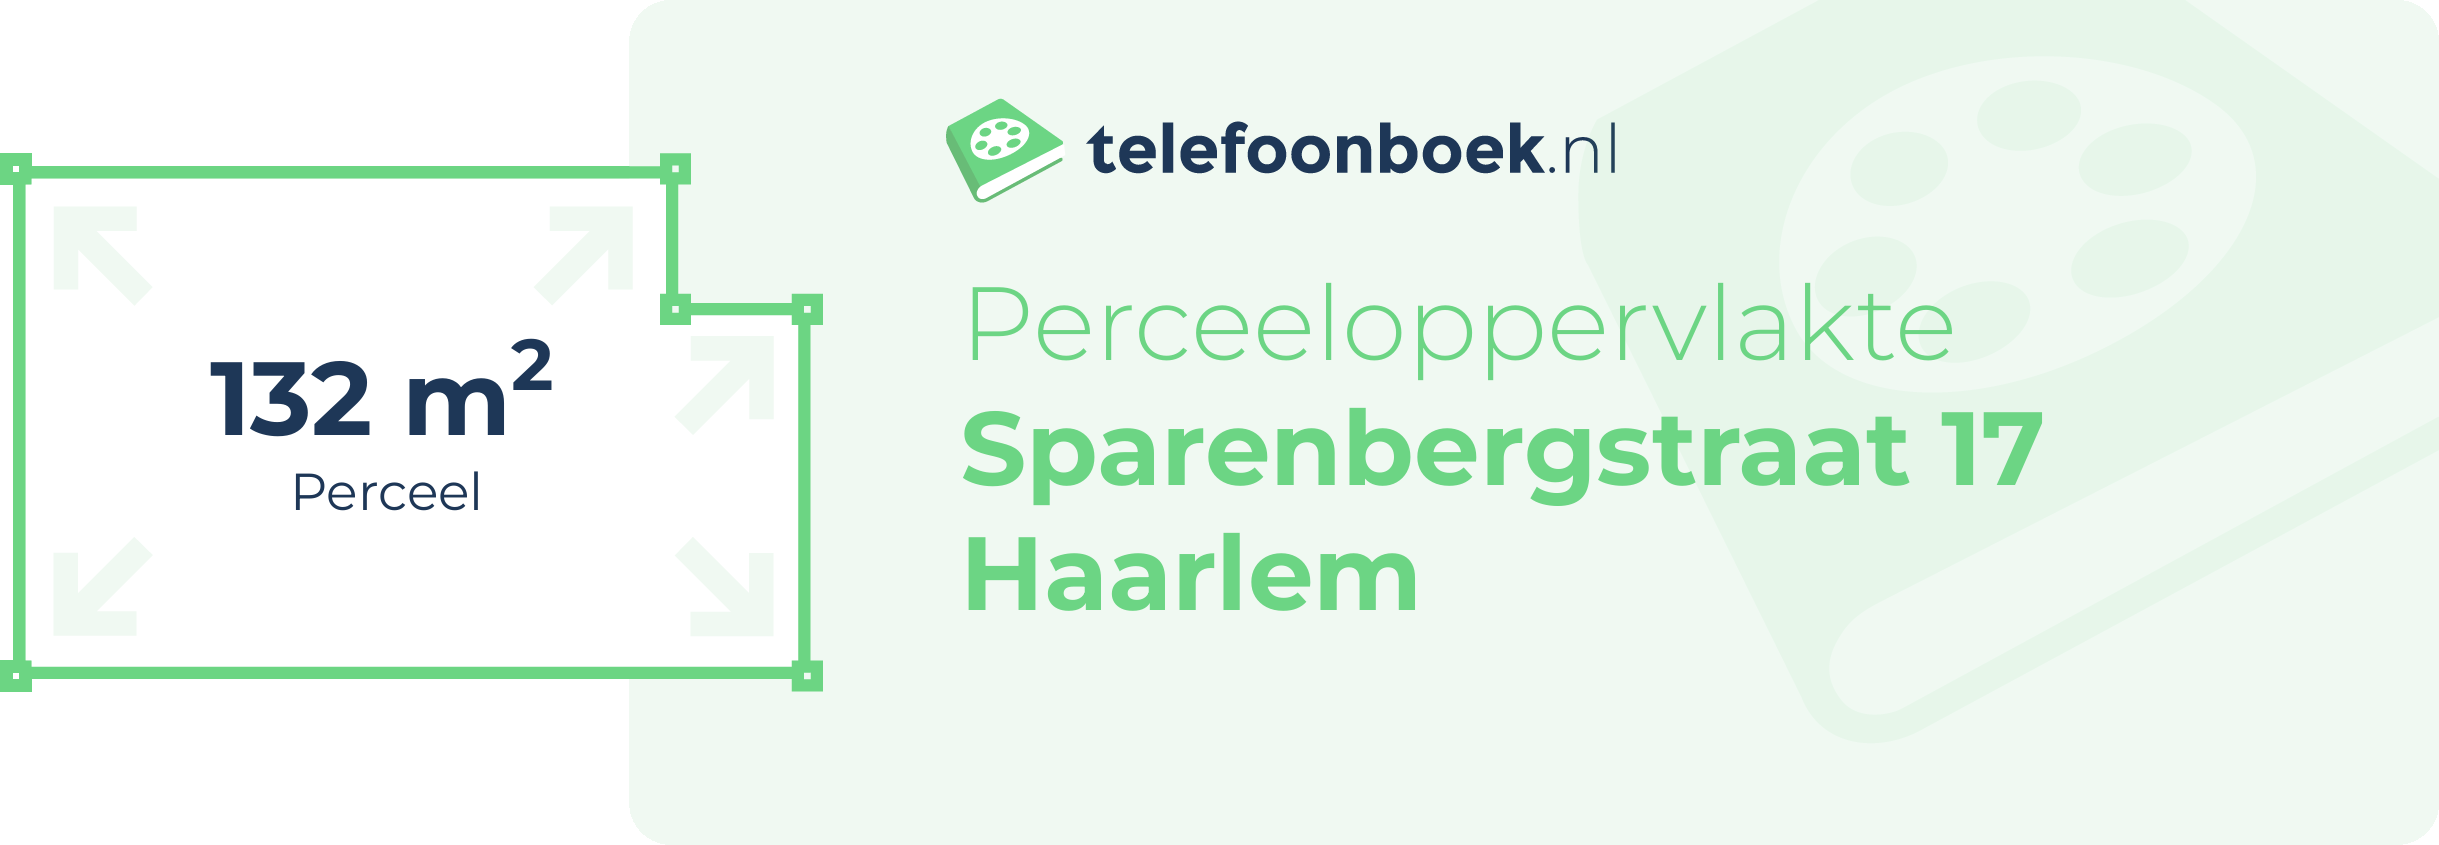 Perceeloppervlakte Sparenbergstraat 17 Haarlem